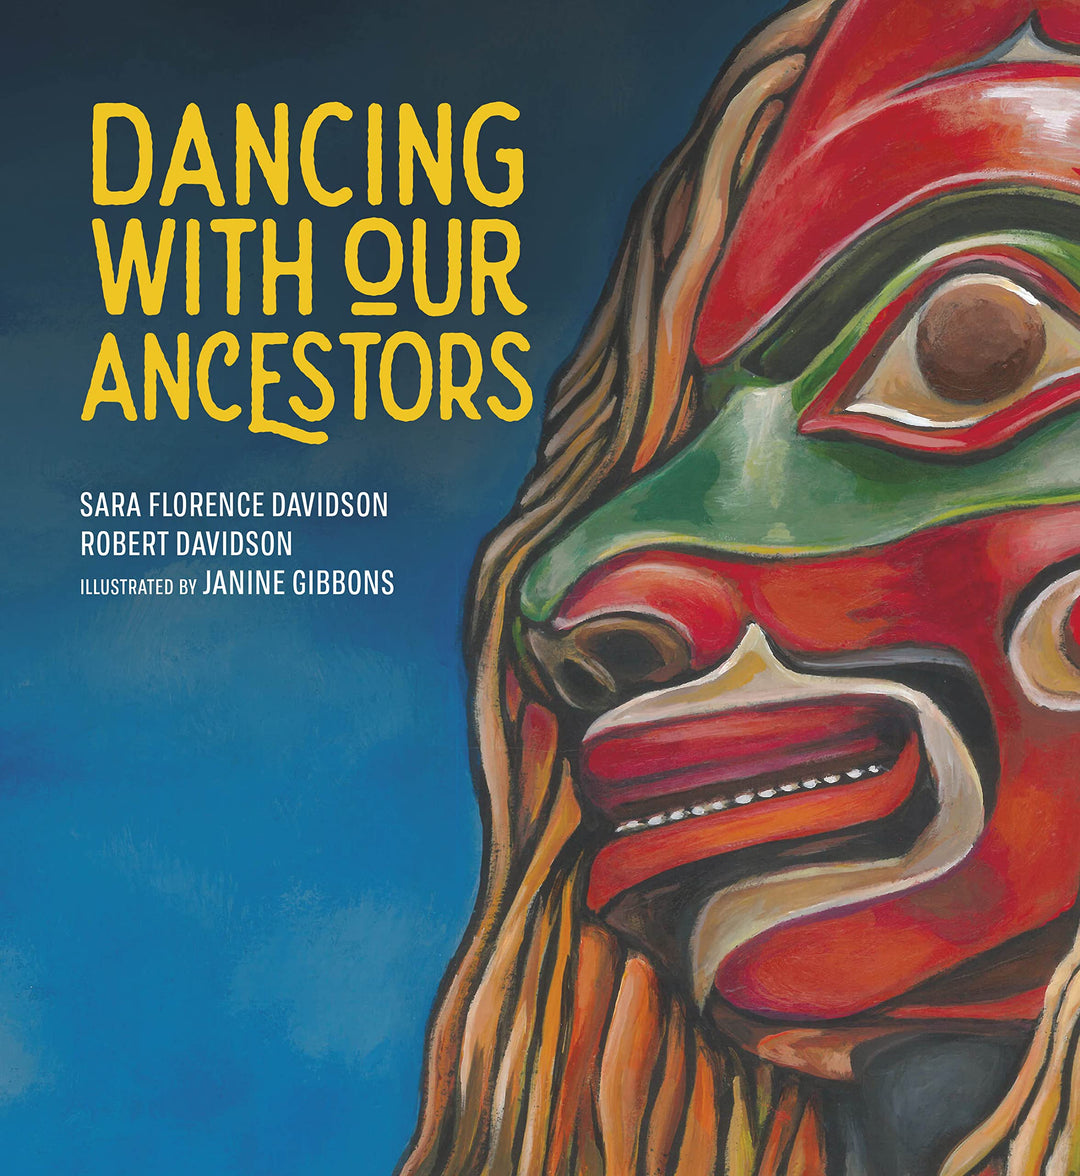 Dancing with Our Ancestors by Sara Florence Davidson & Robert Davidson